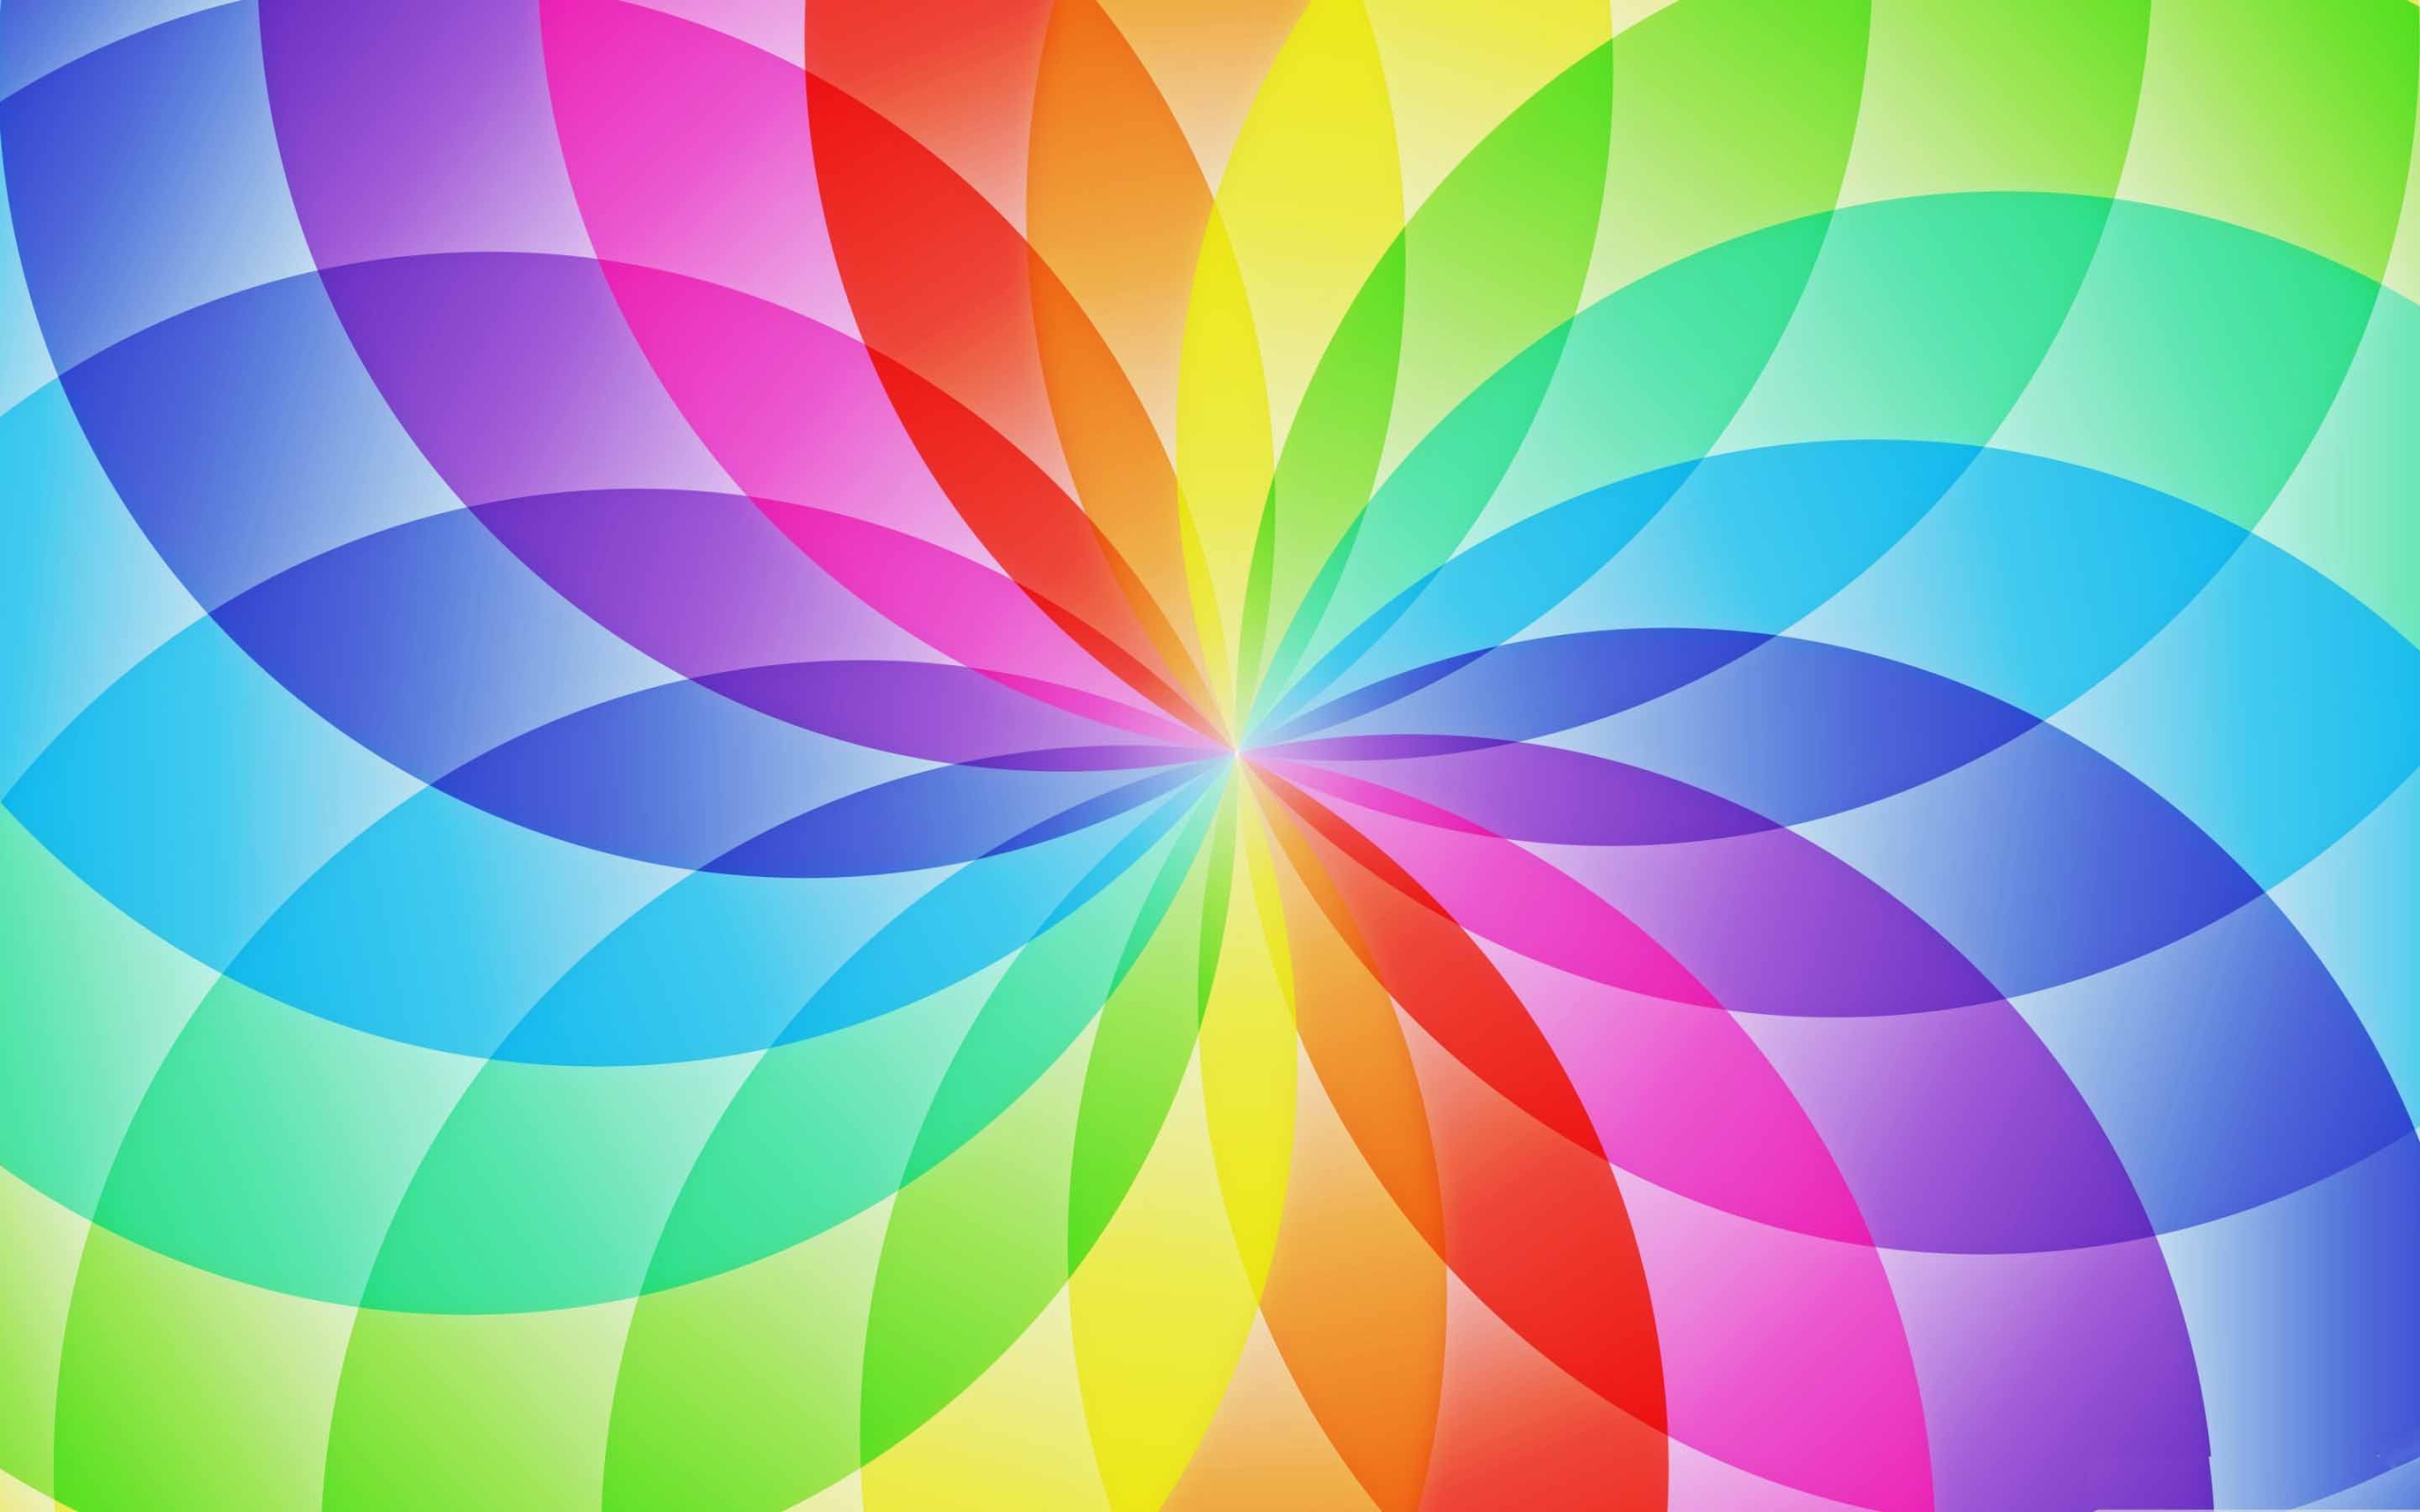 Rainbow Circles Mac Wallpaper Download. Free Mac Wallpaper Download